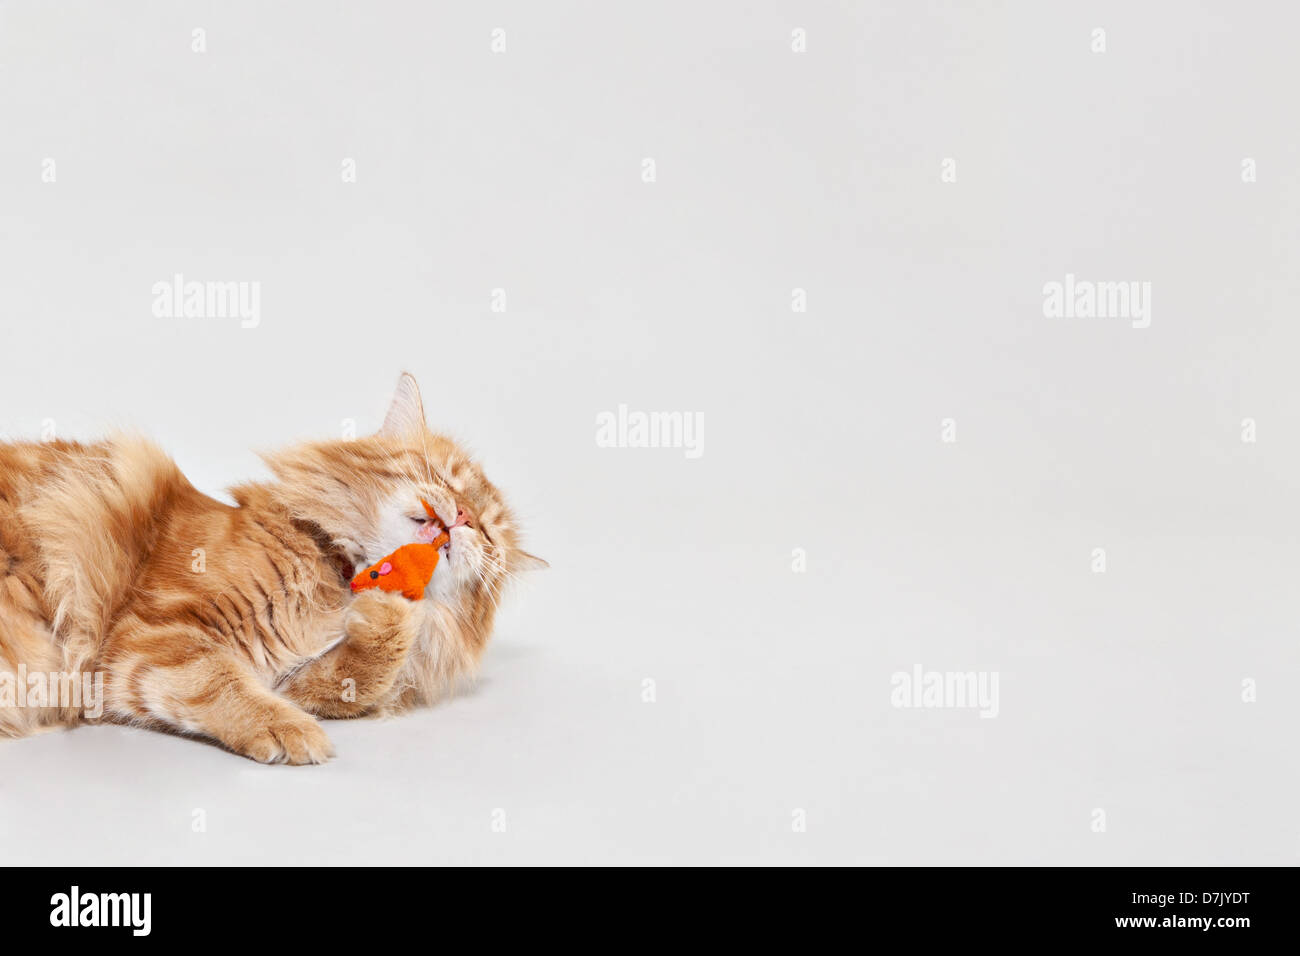 Jengibre Cymric Manx Gato jugando con naranja mouse toy en studio Foto de stock